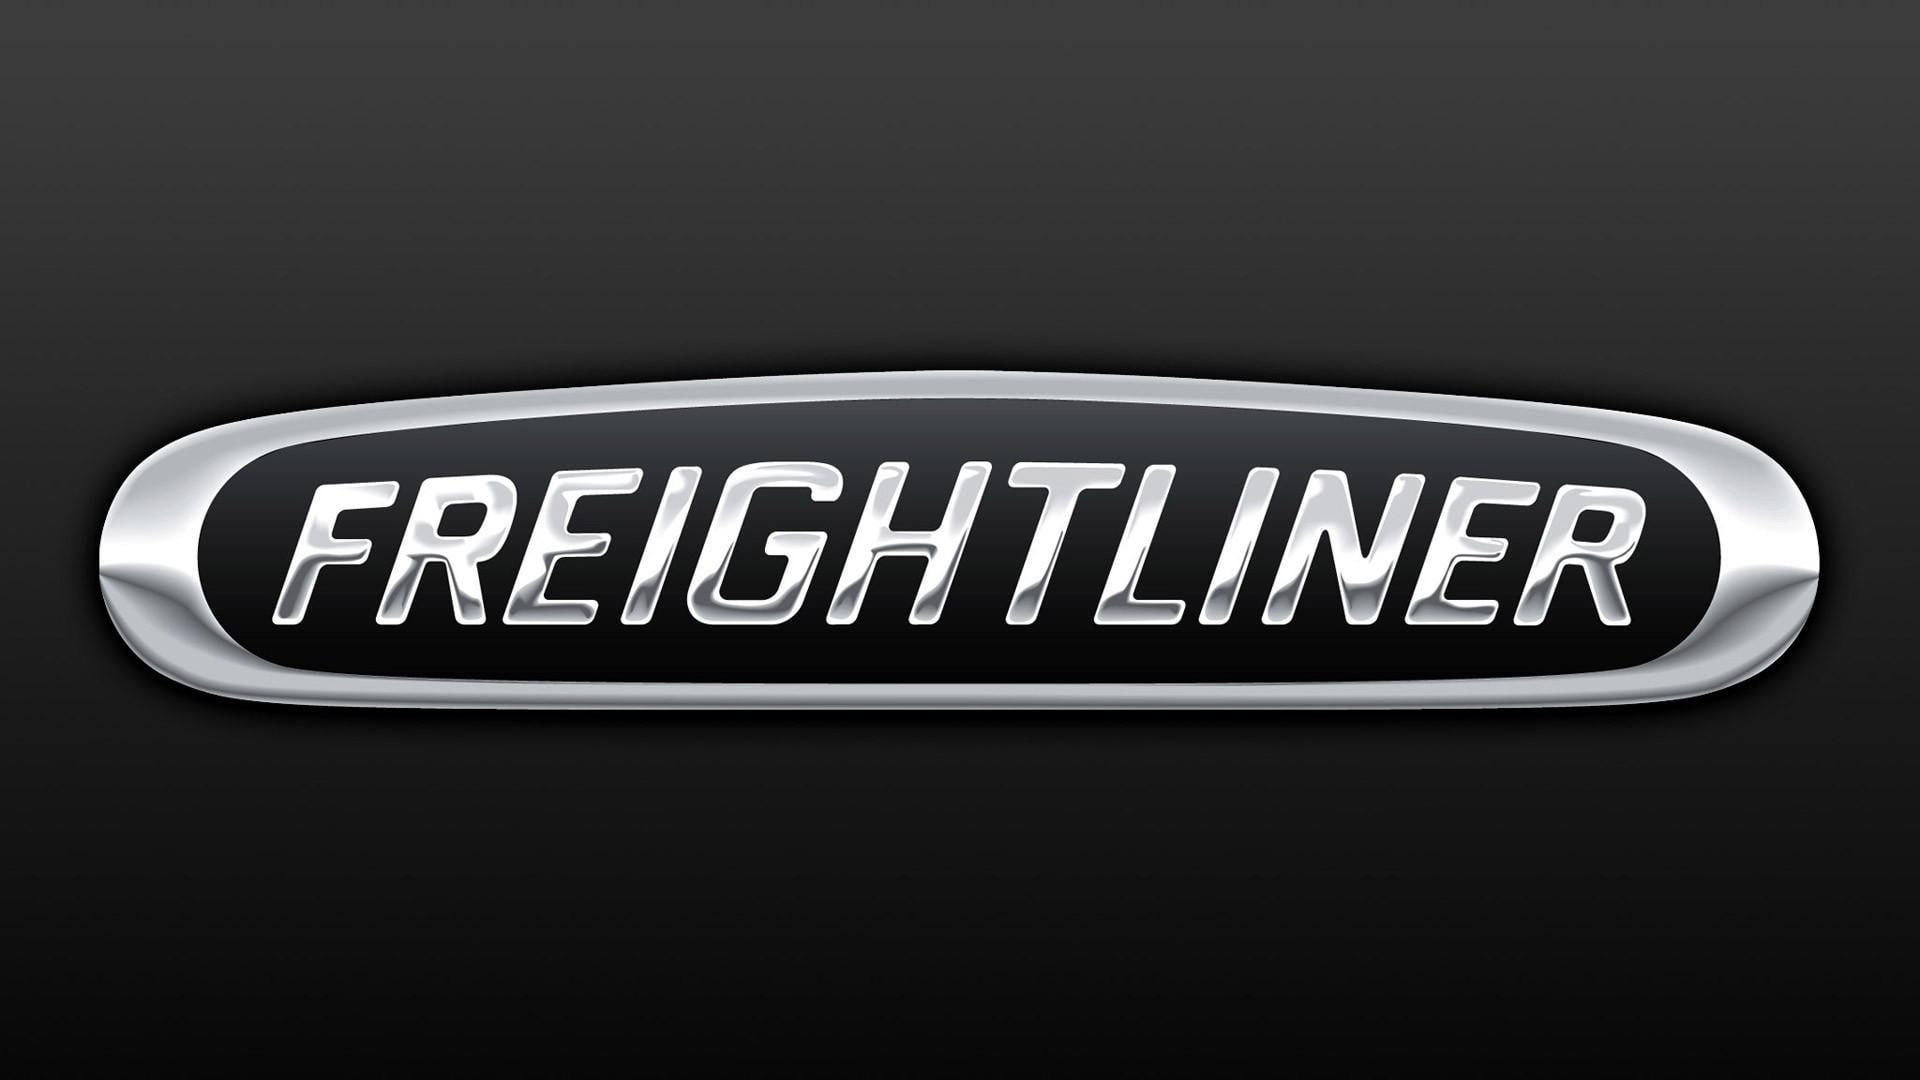 Freightliner, freightliner logo, cars, 1920x1080